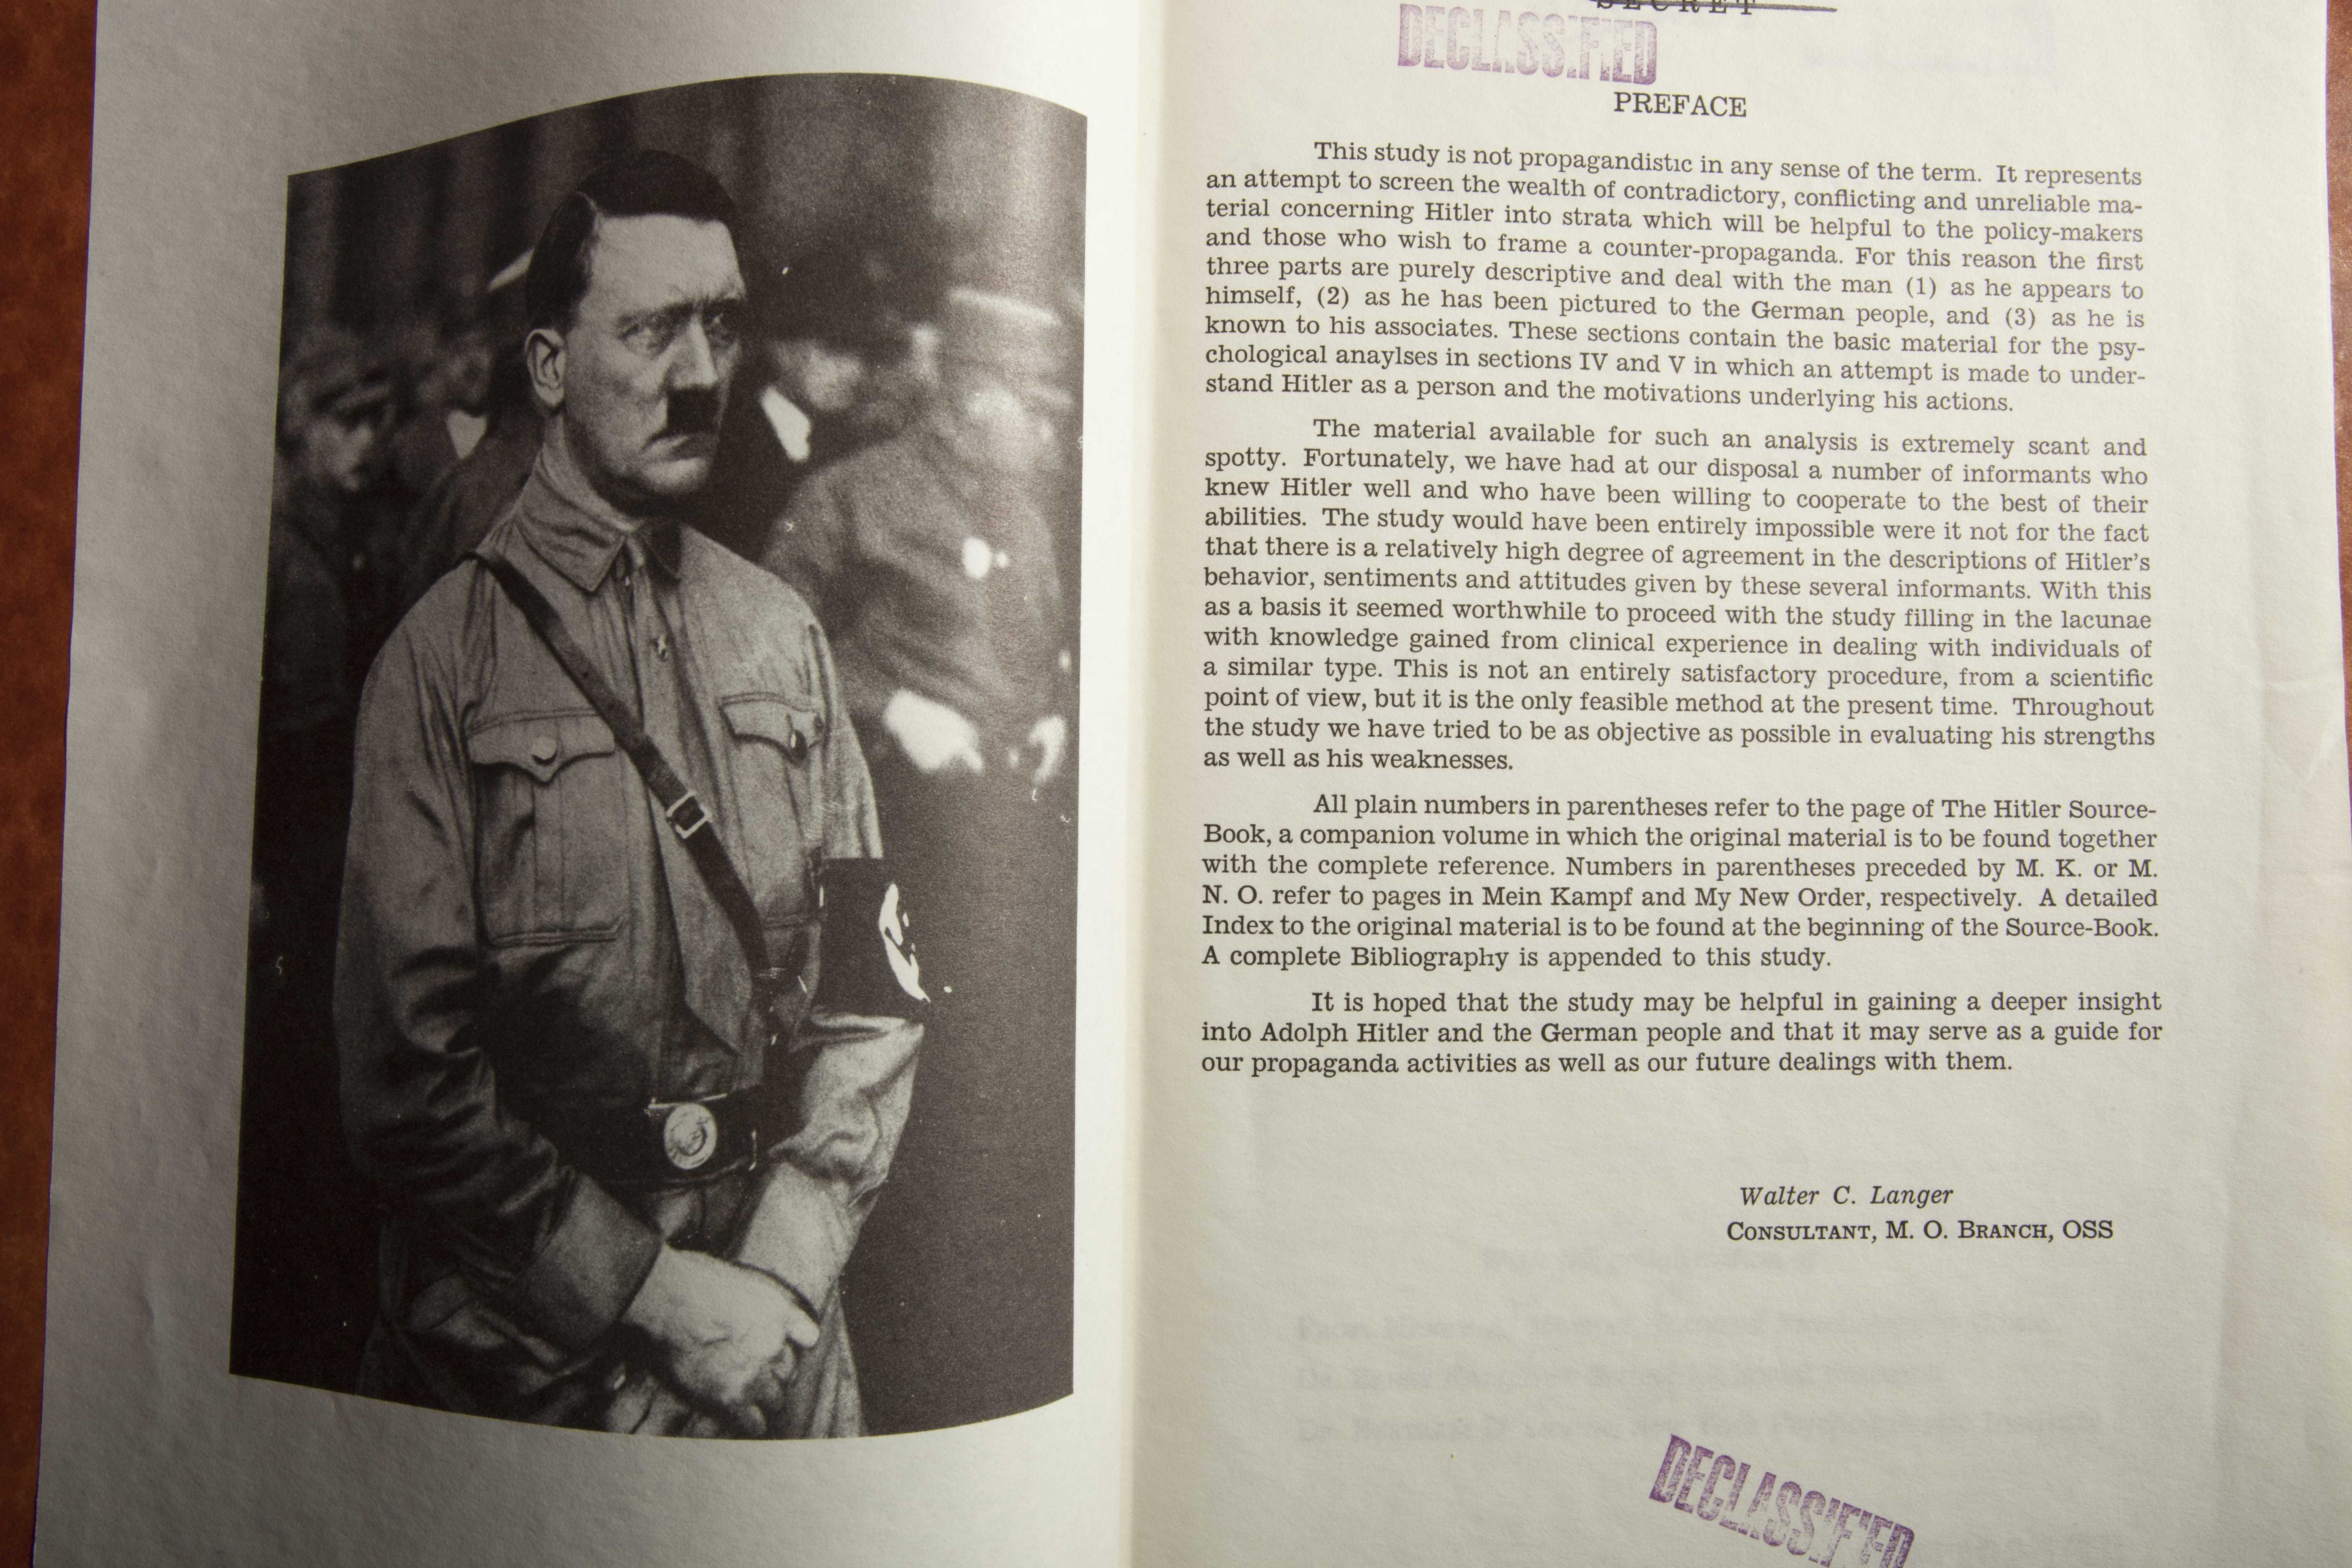 The preface of Walter Langer's book, alongside a photo of Adolph Hitler.